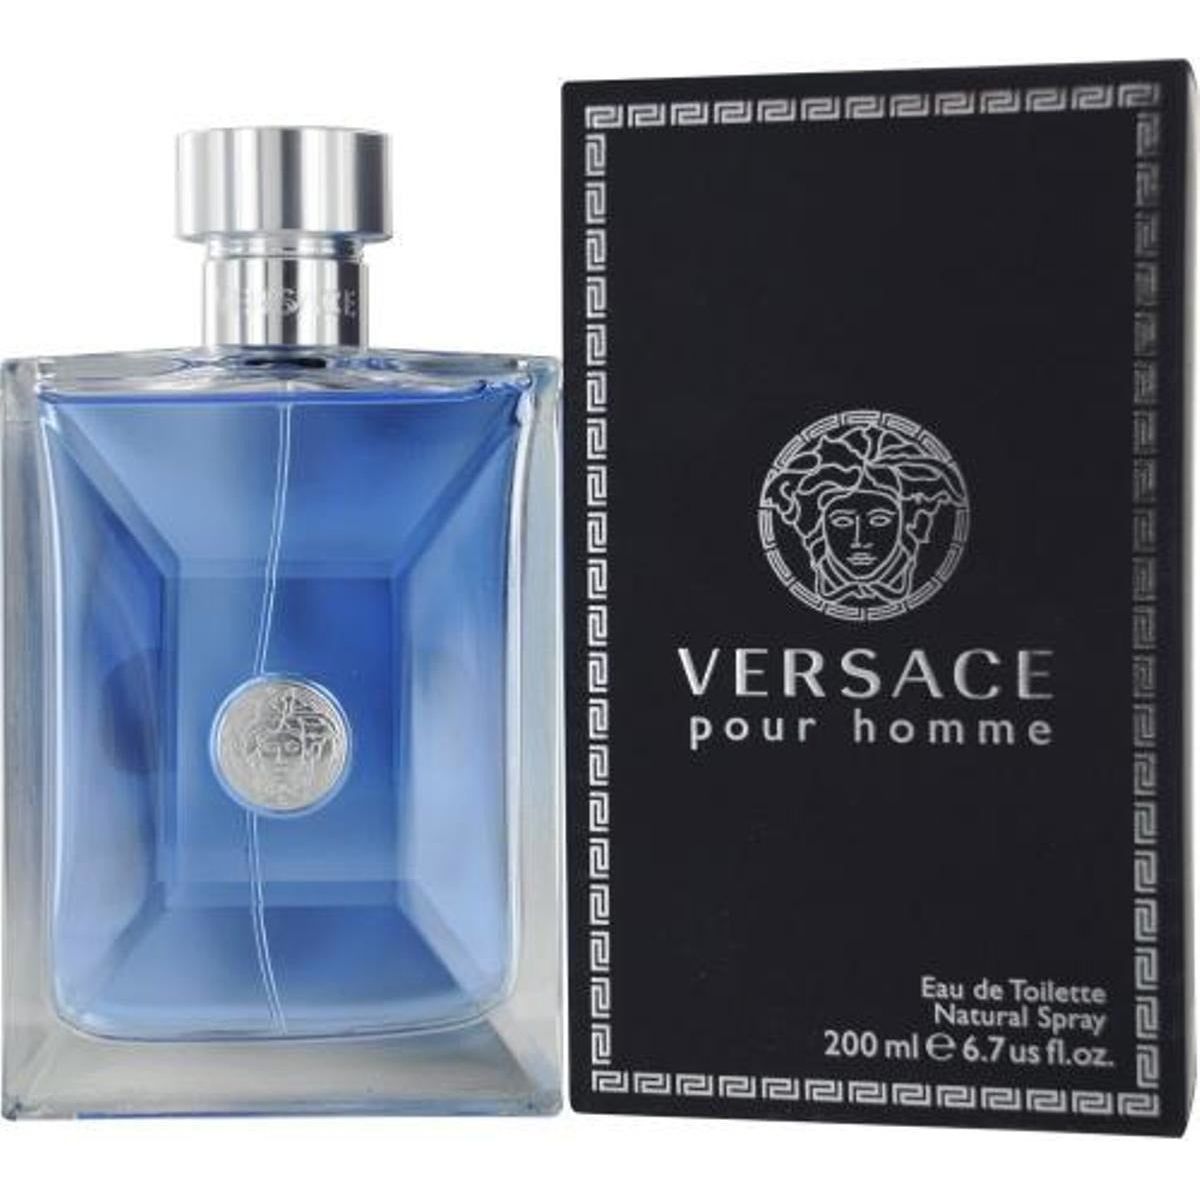 Versace Dylan Blue 6.7 oz M EDT Spray – perfumesandrea